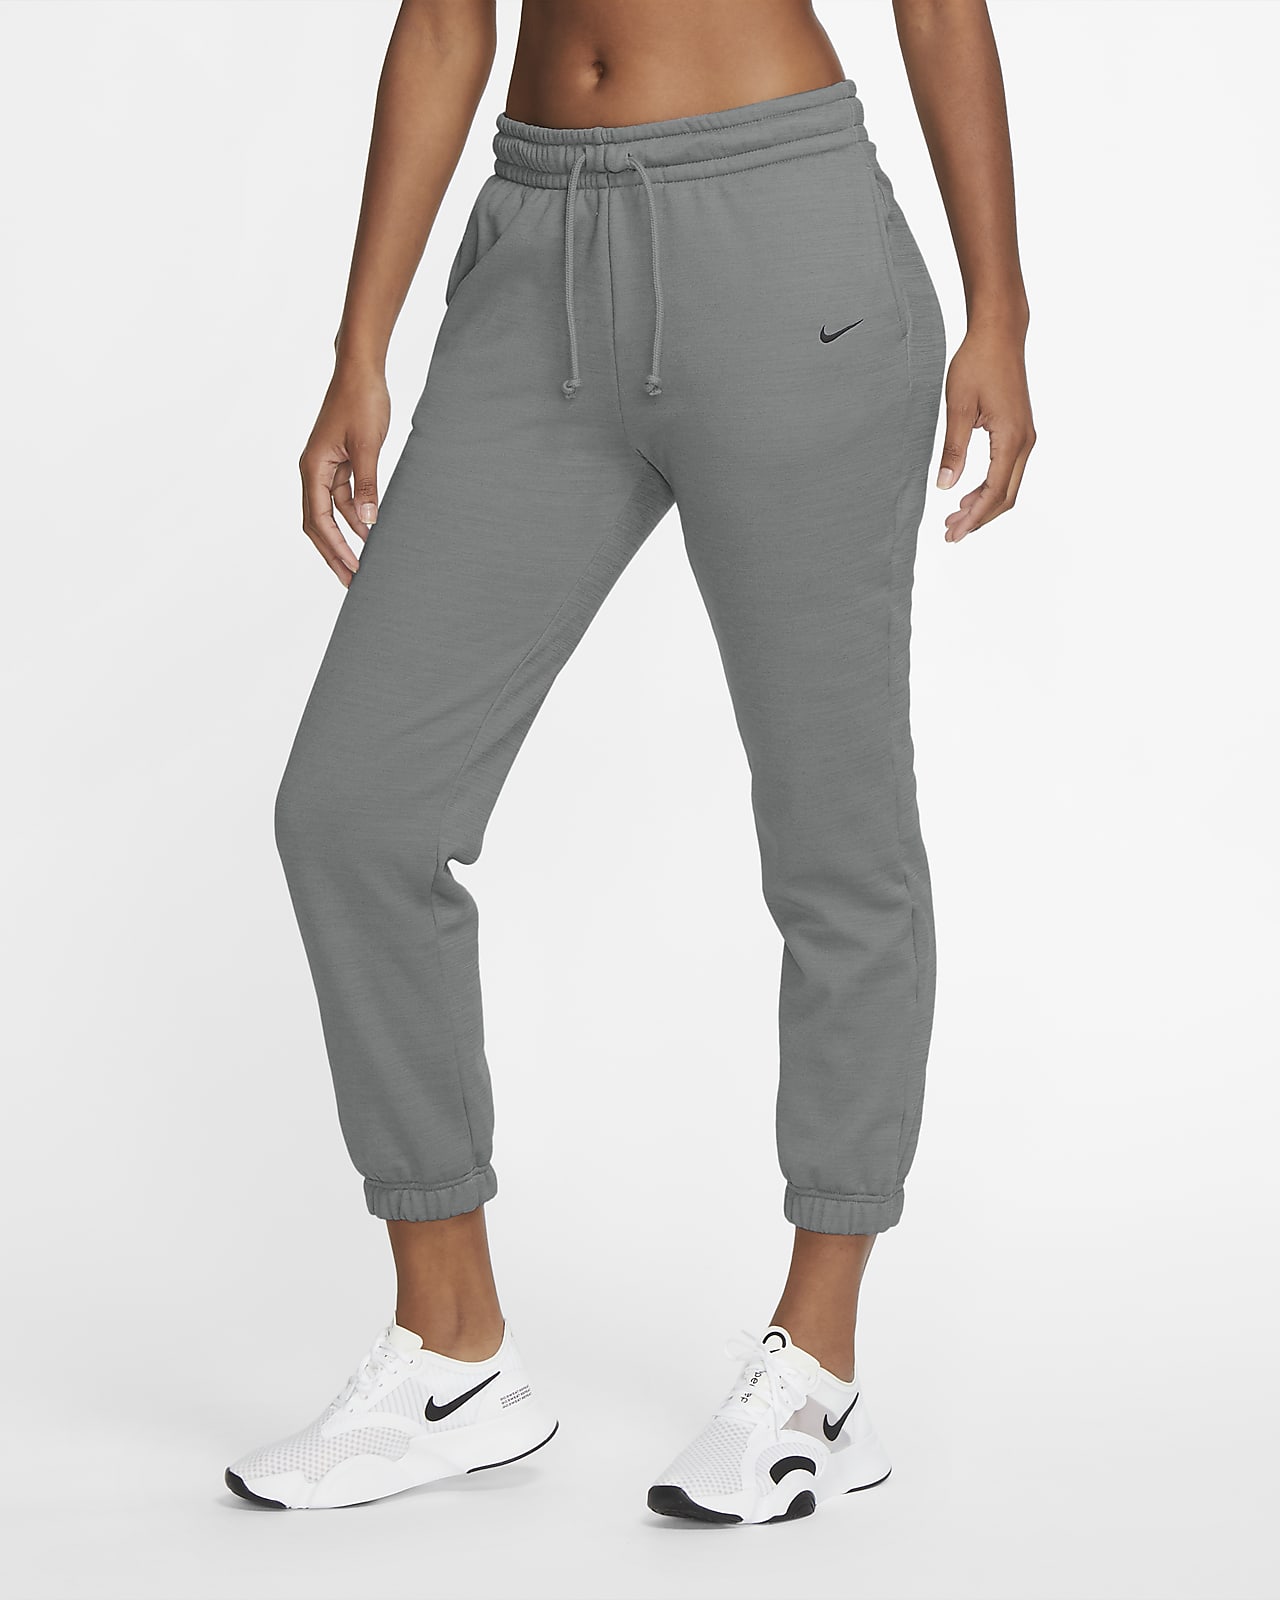 grey nike pants womens